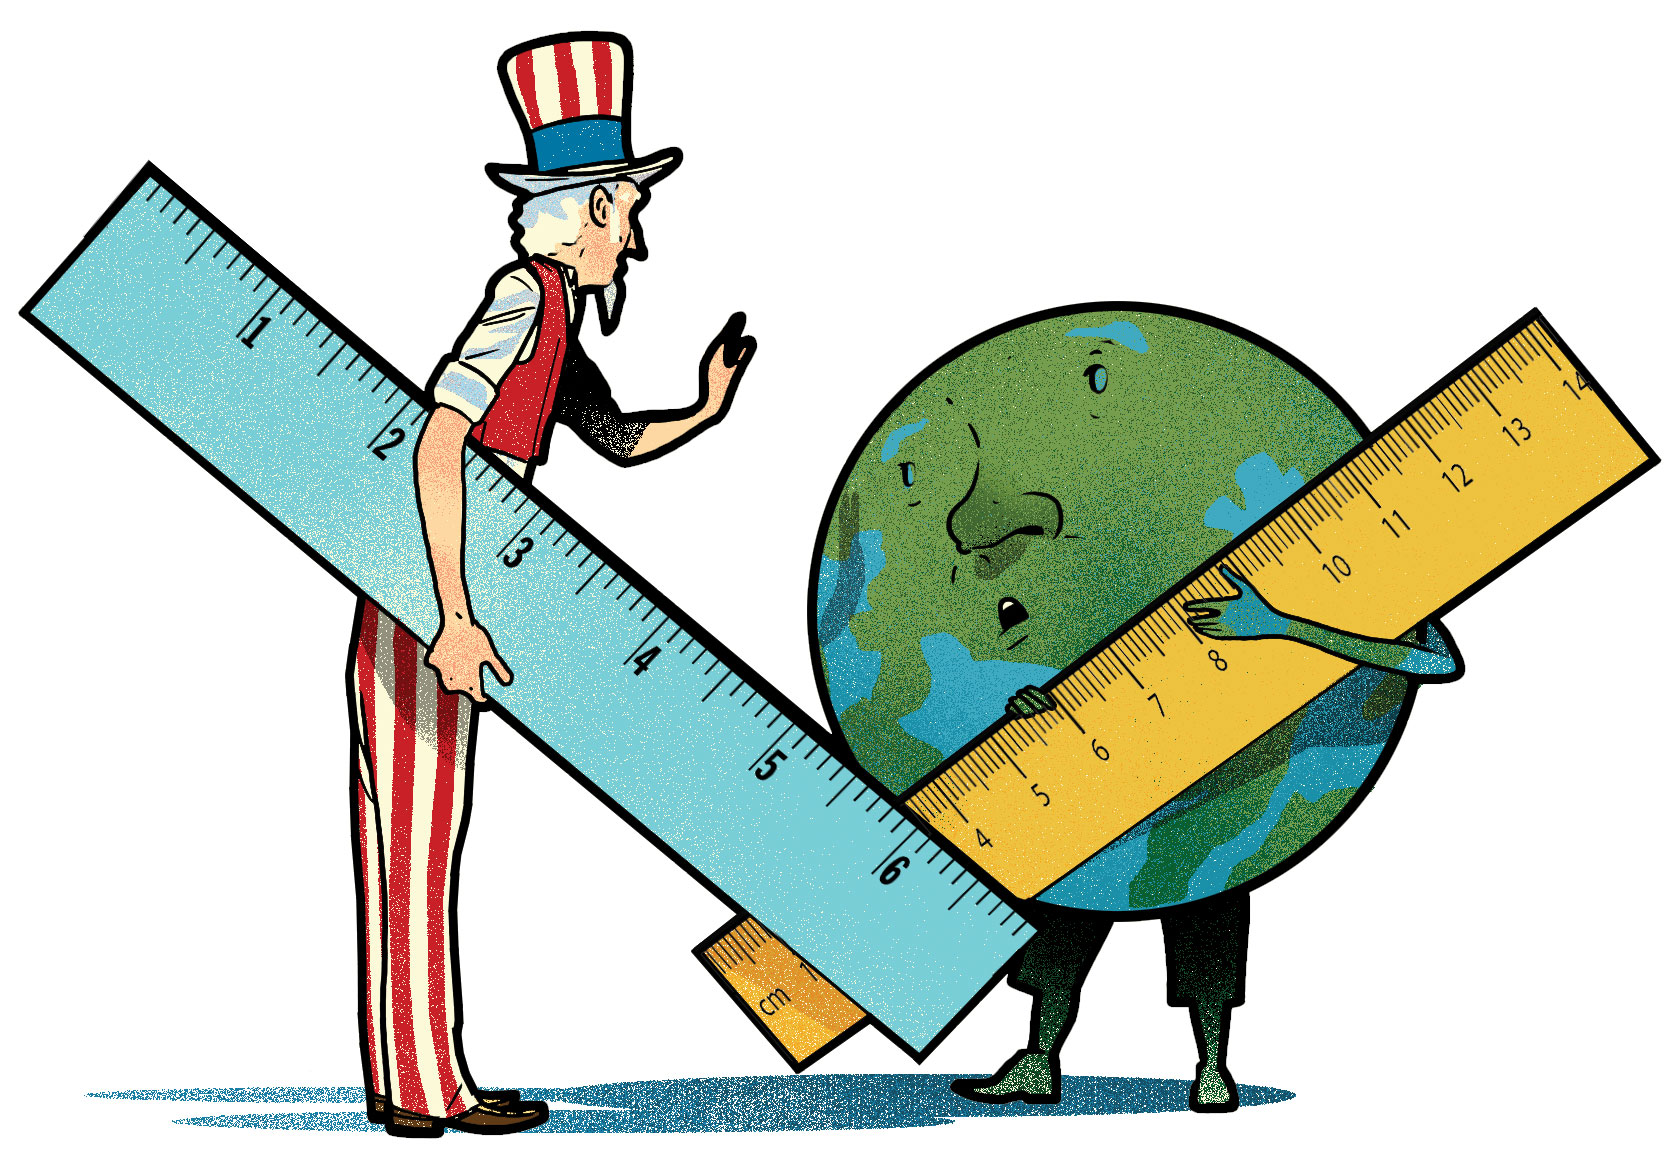 Uncle Sam versus the metric system